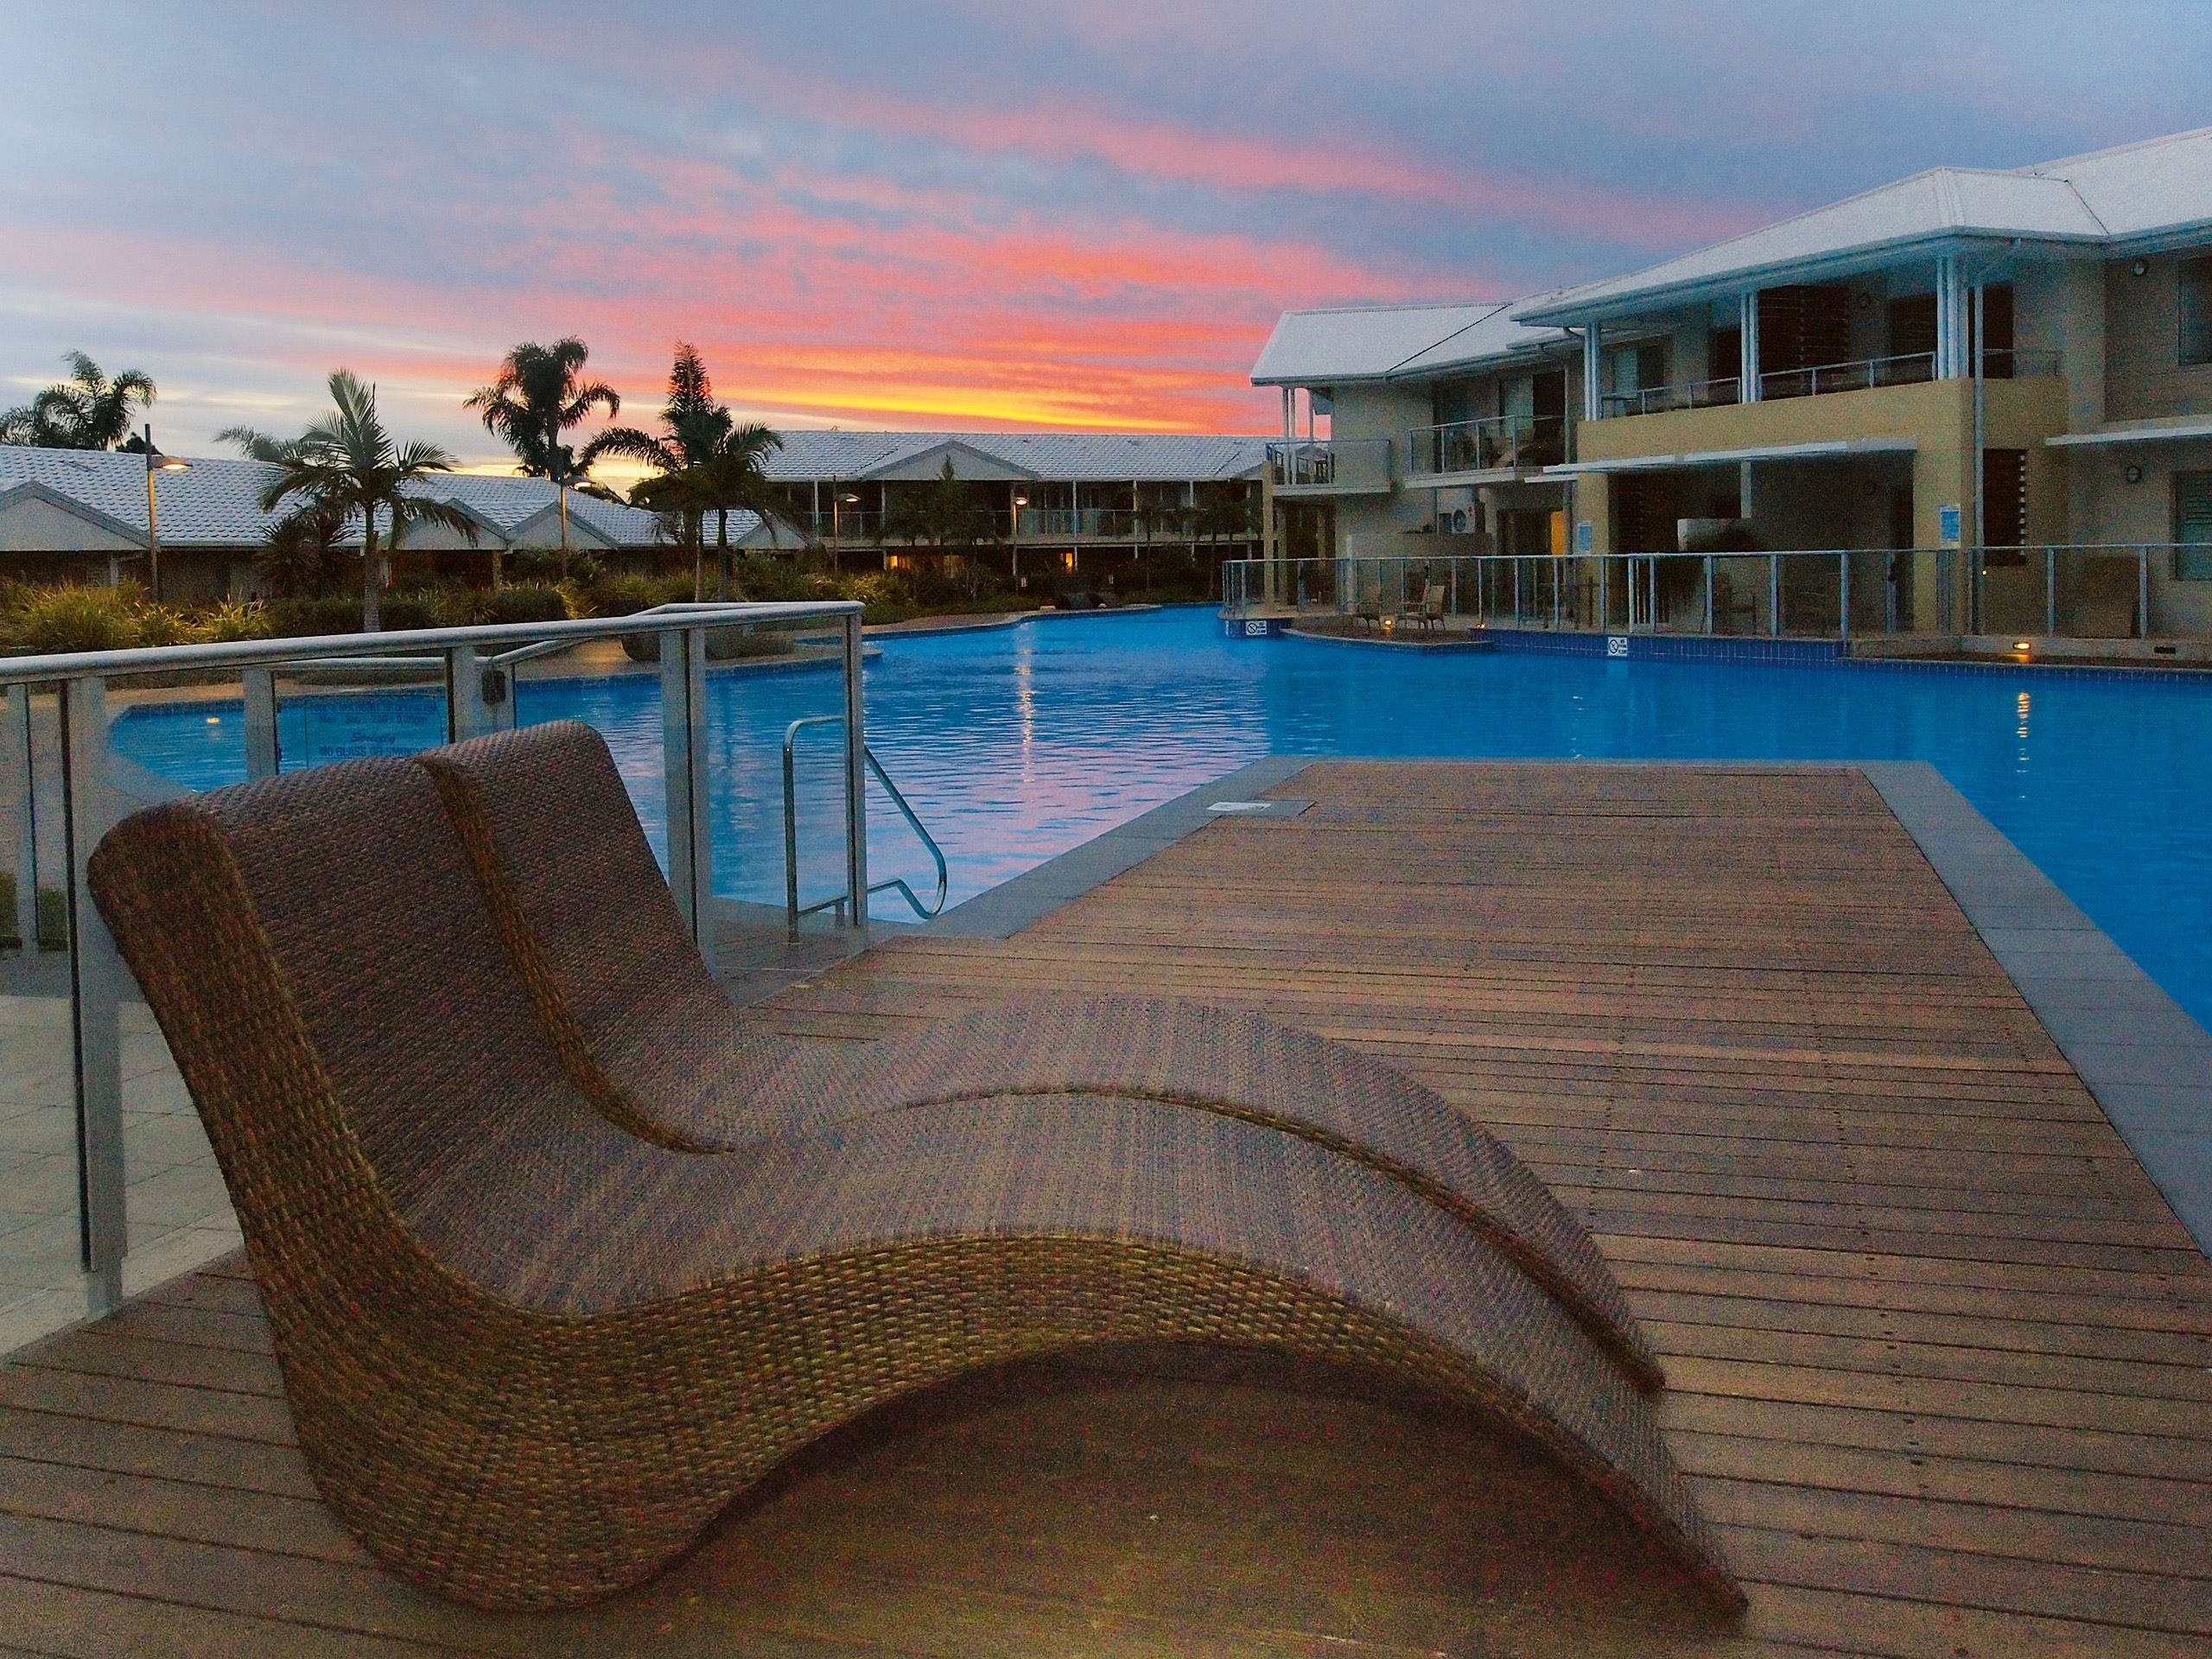 Oaks Port Stephens Pacific Blue Resort - Nambucca Heads Accommodation